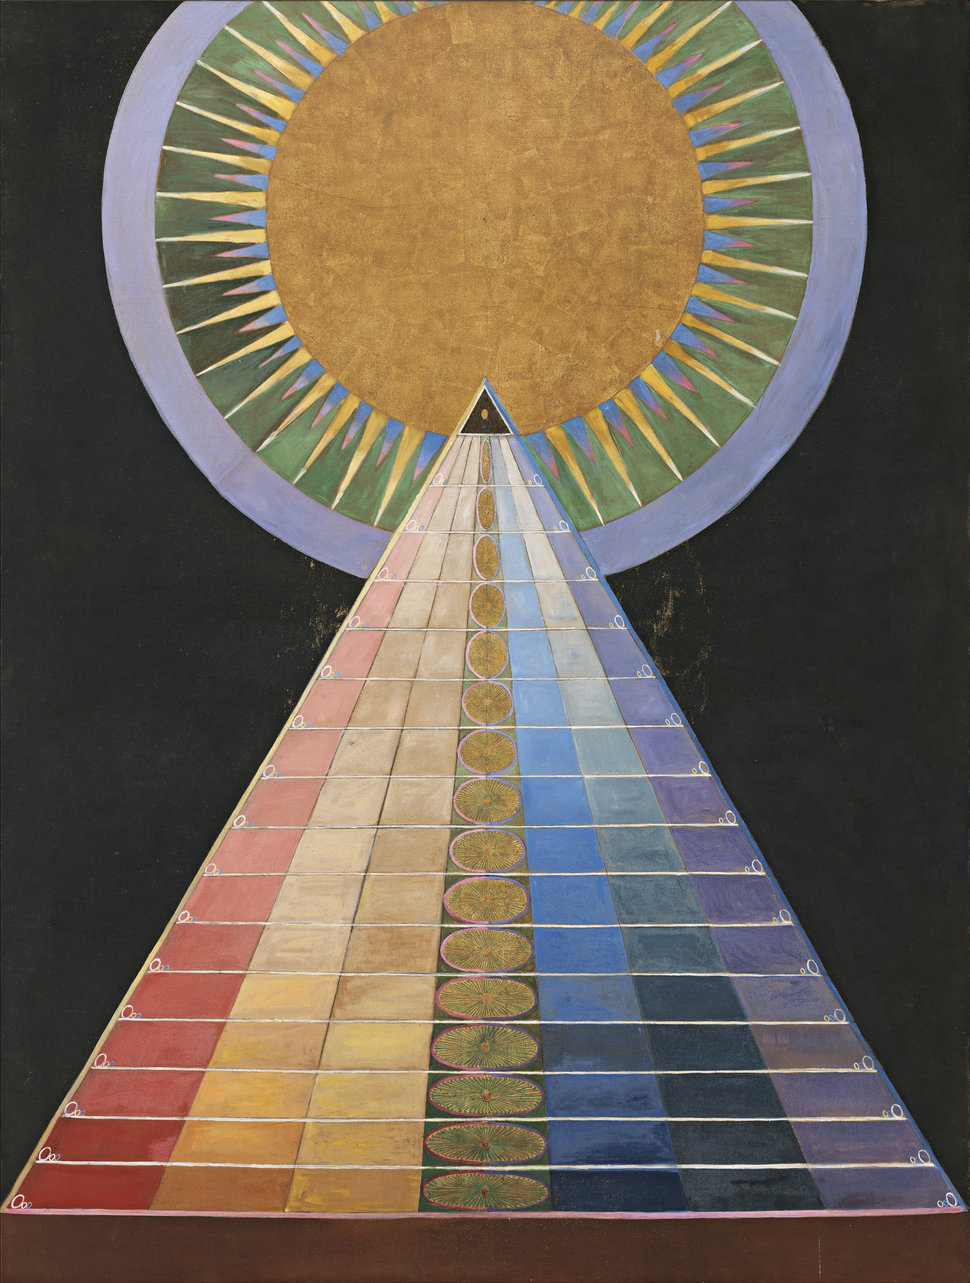 Hilma af Klint's "Group&nbsp;X,&nbsp;No.&nbsp;1,&nbsp;Altarpiece(Grupp&nbsp;X,&nbsp;nr&nbsp;1,&nbsp;Altarbild)," 1915.